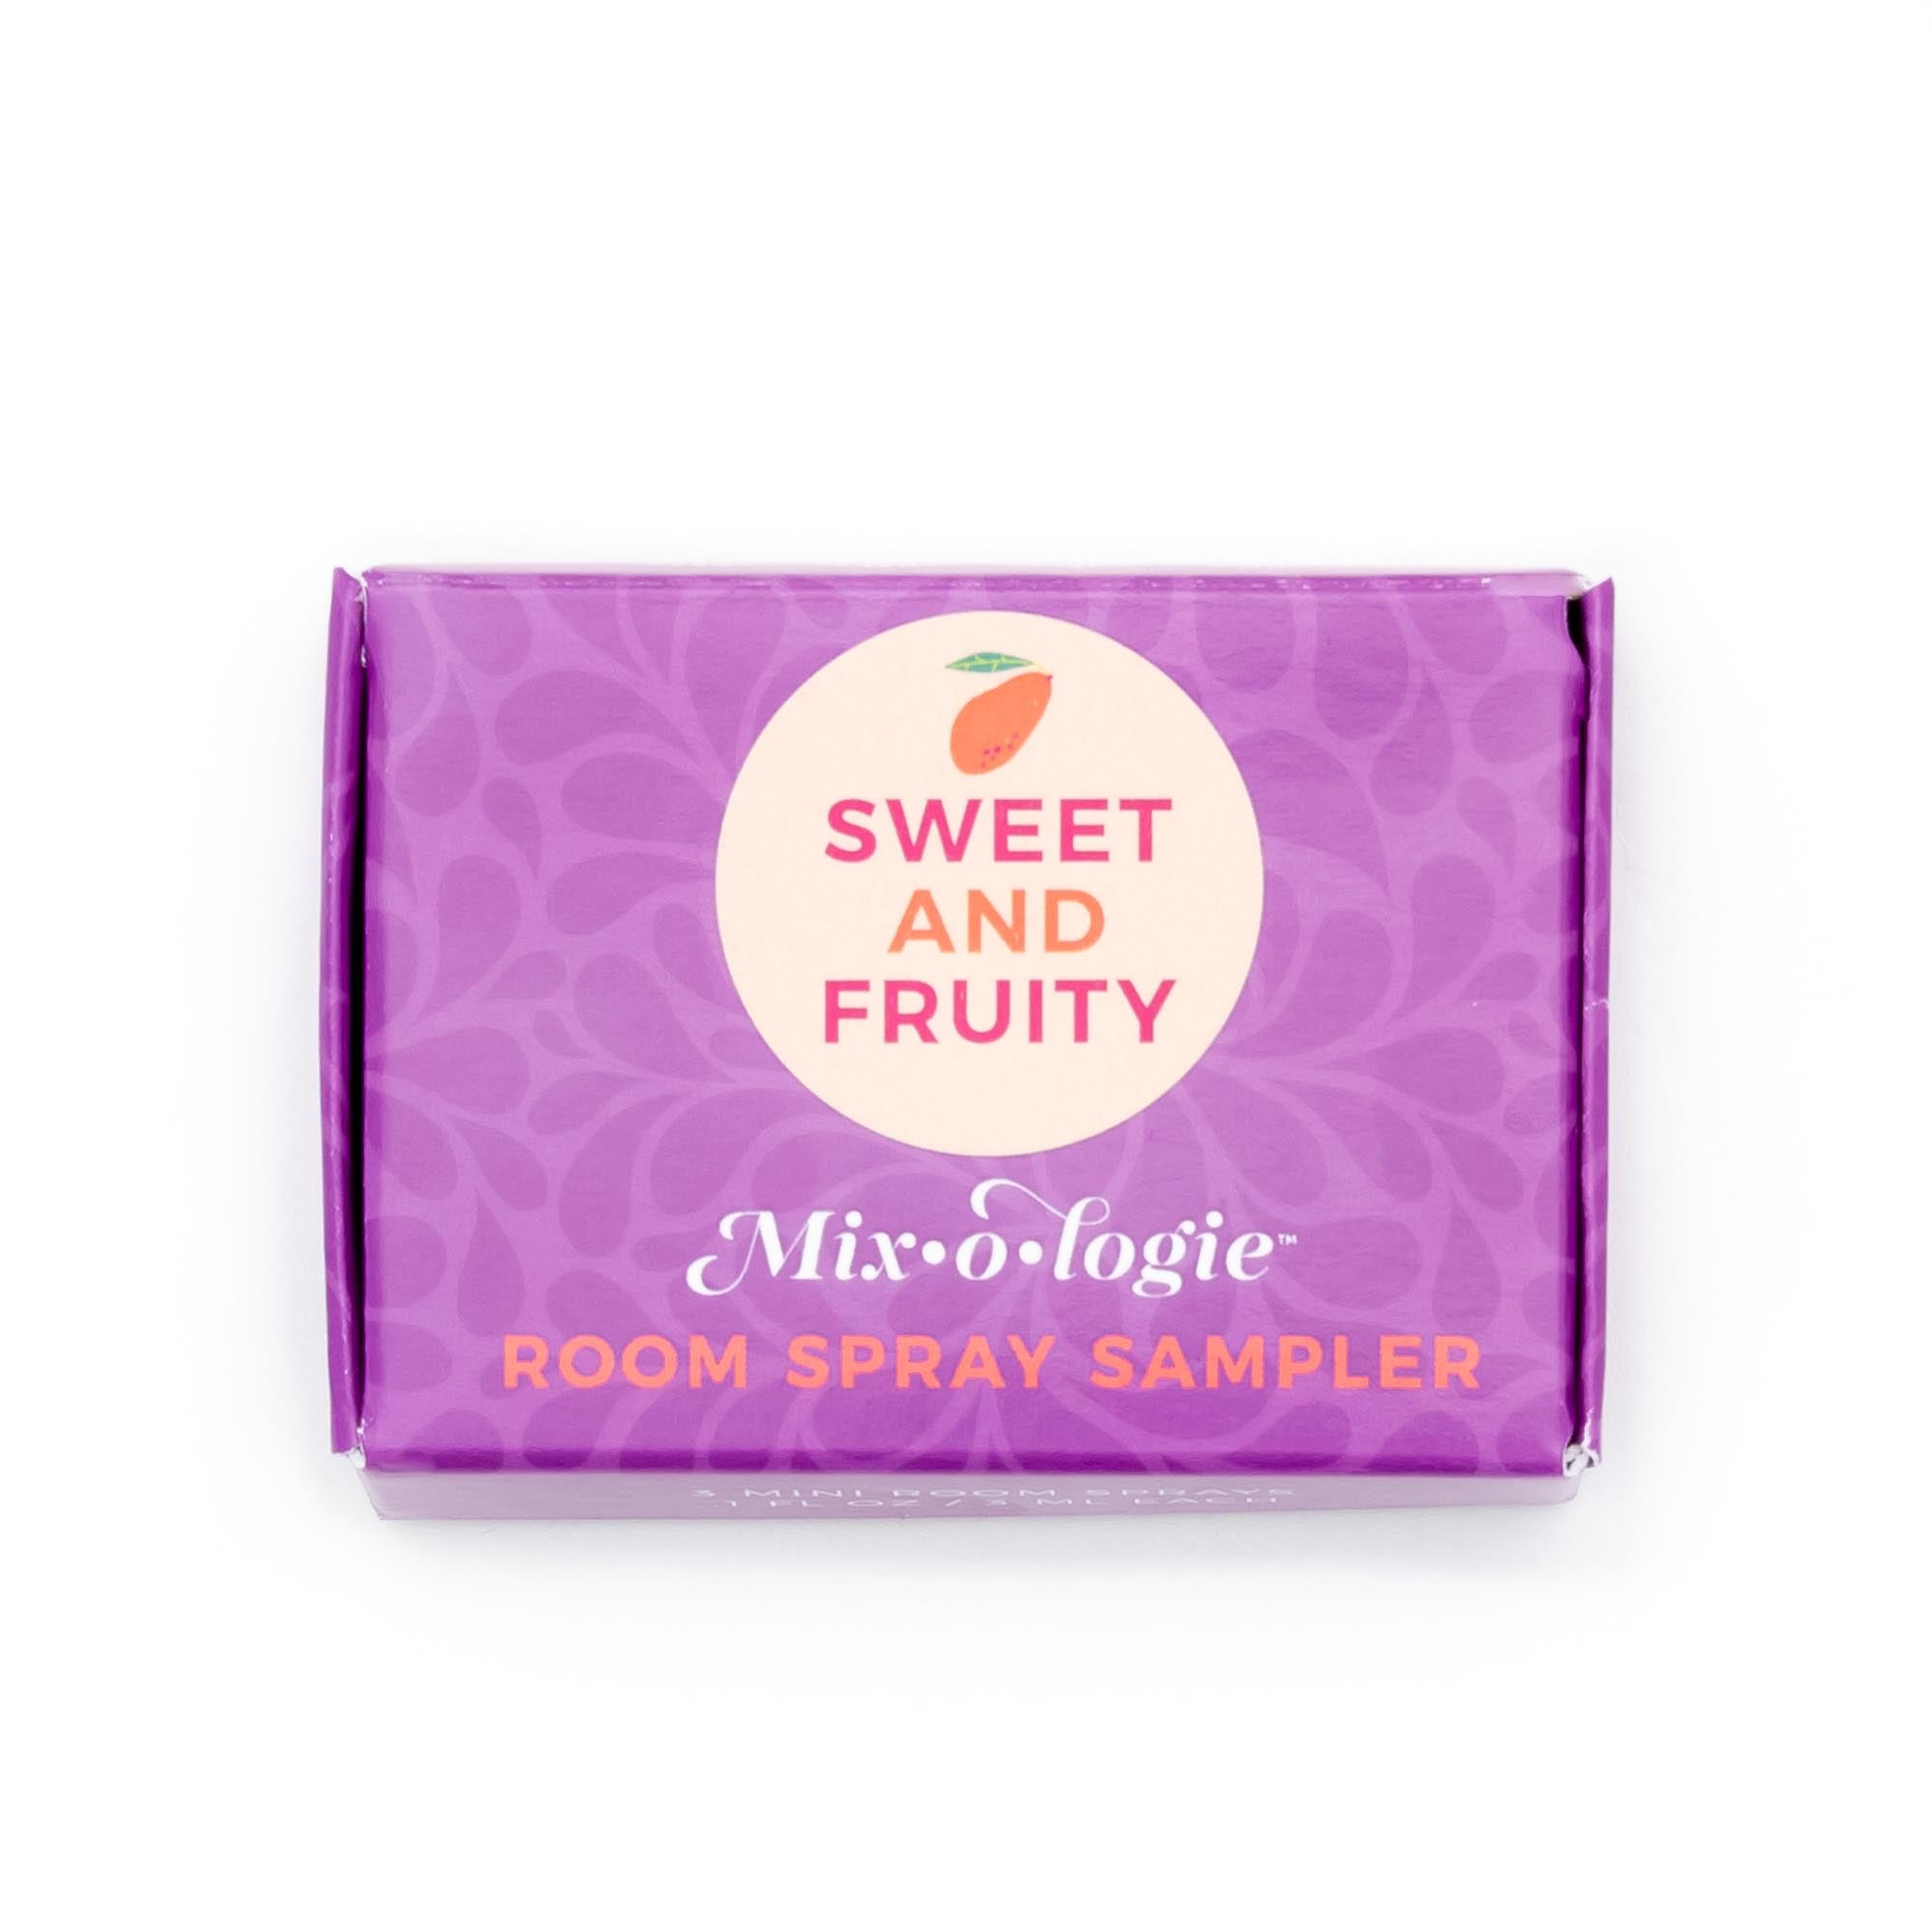 Mini Room Spray Sampler Pack of 3 - Sweet and Fruity